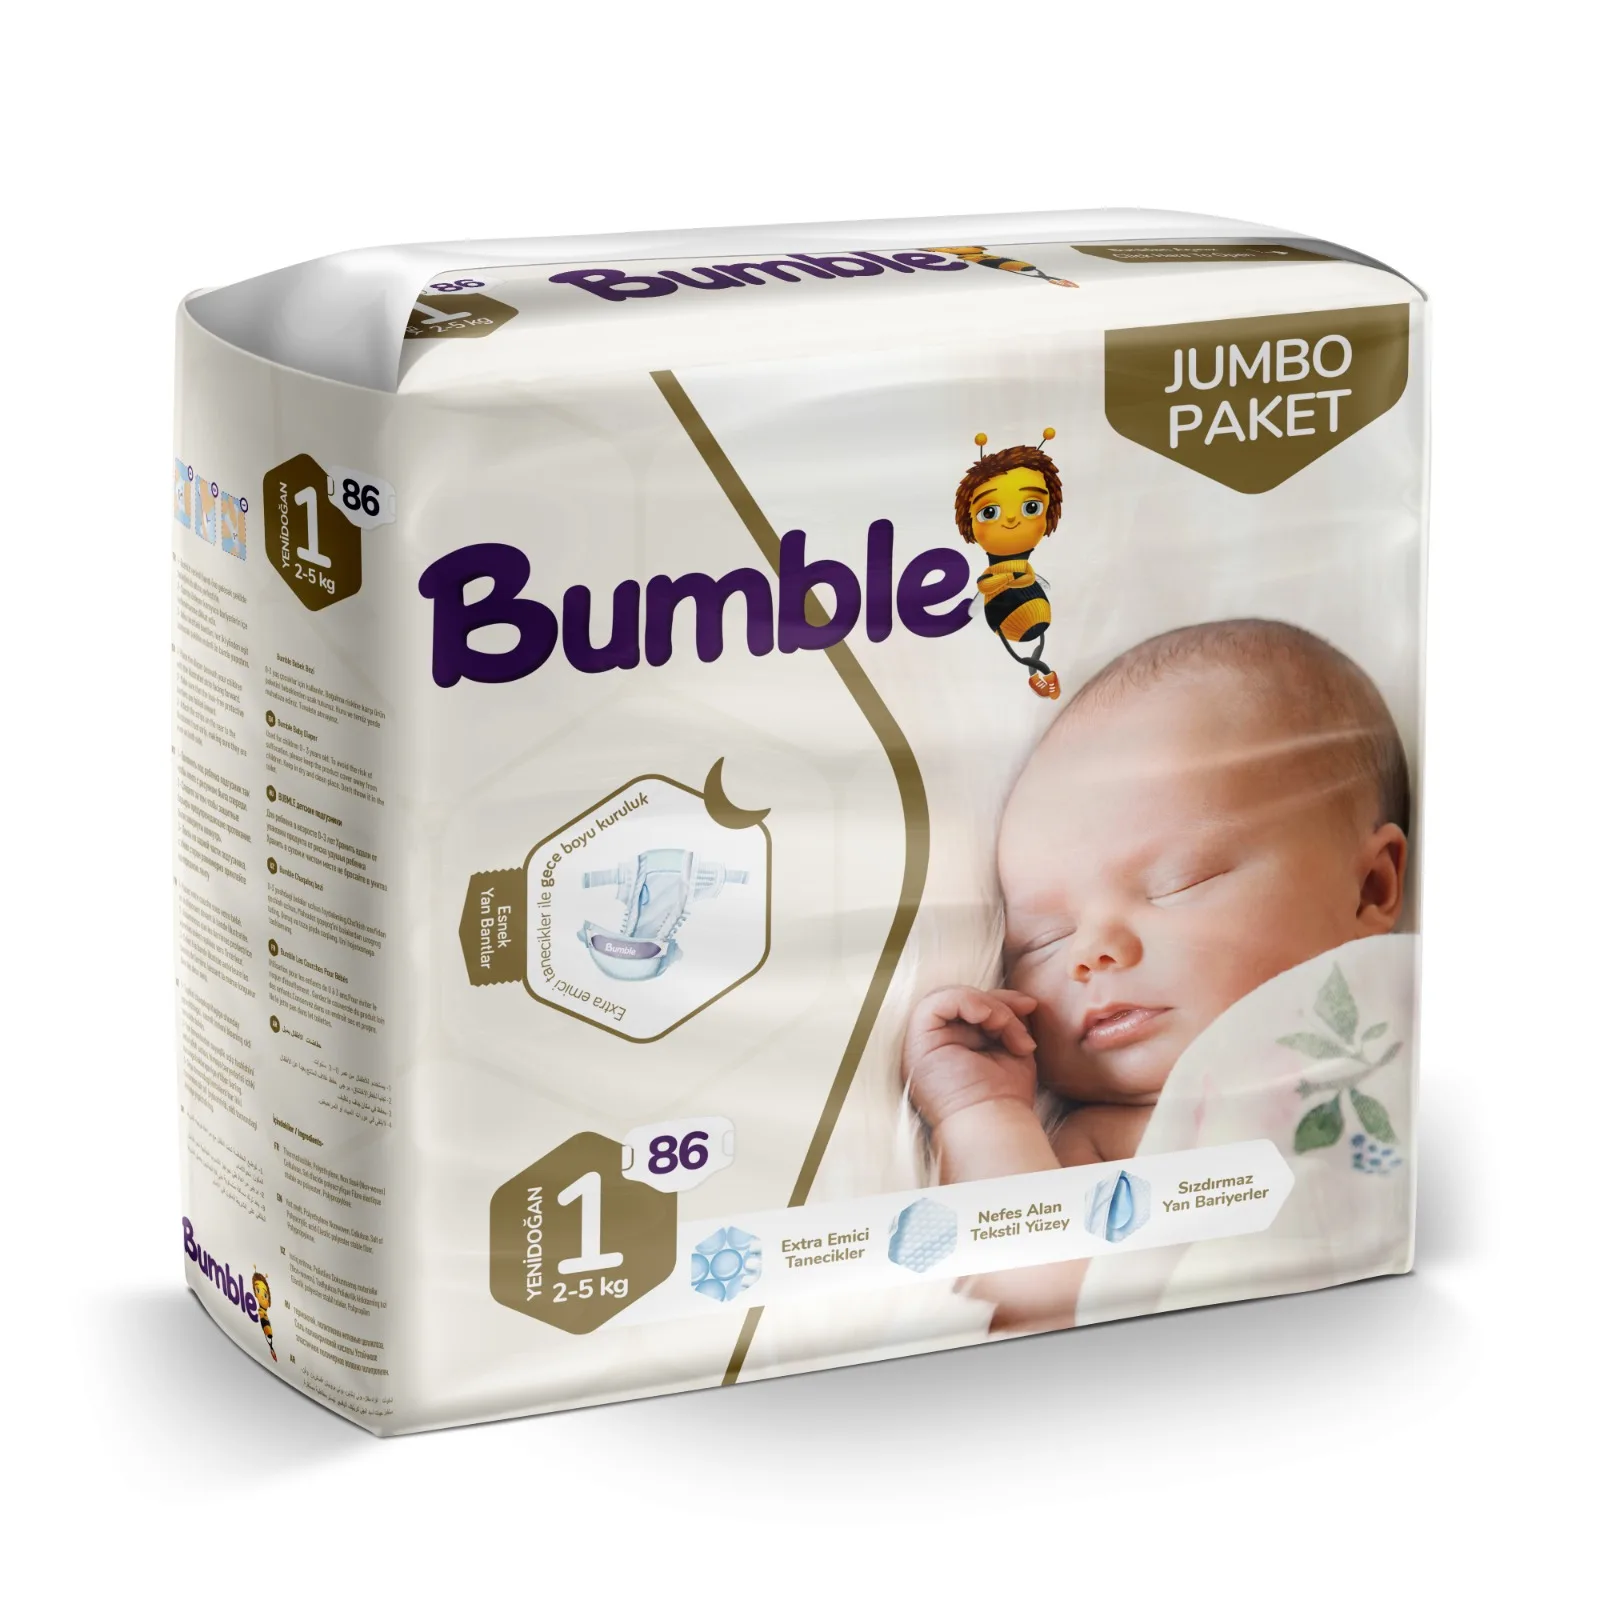 jumbo pack diapers